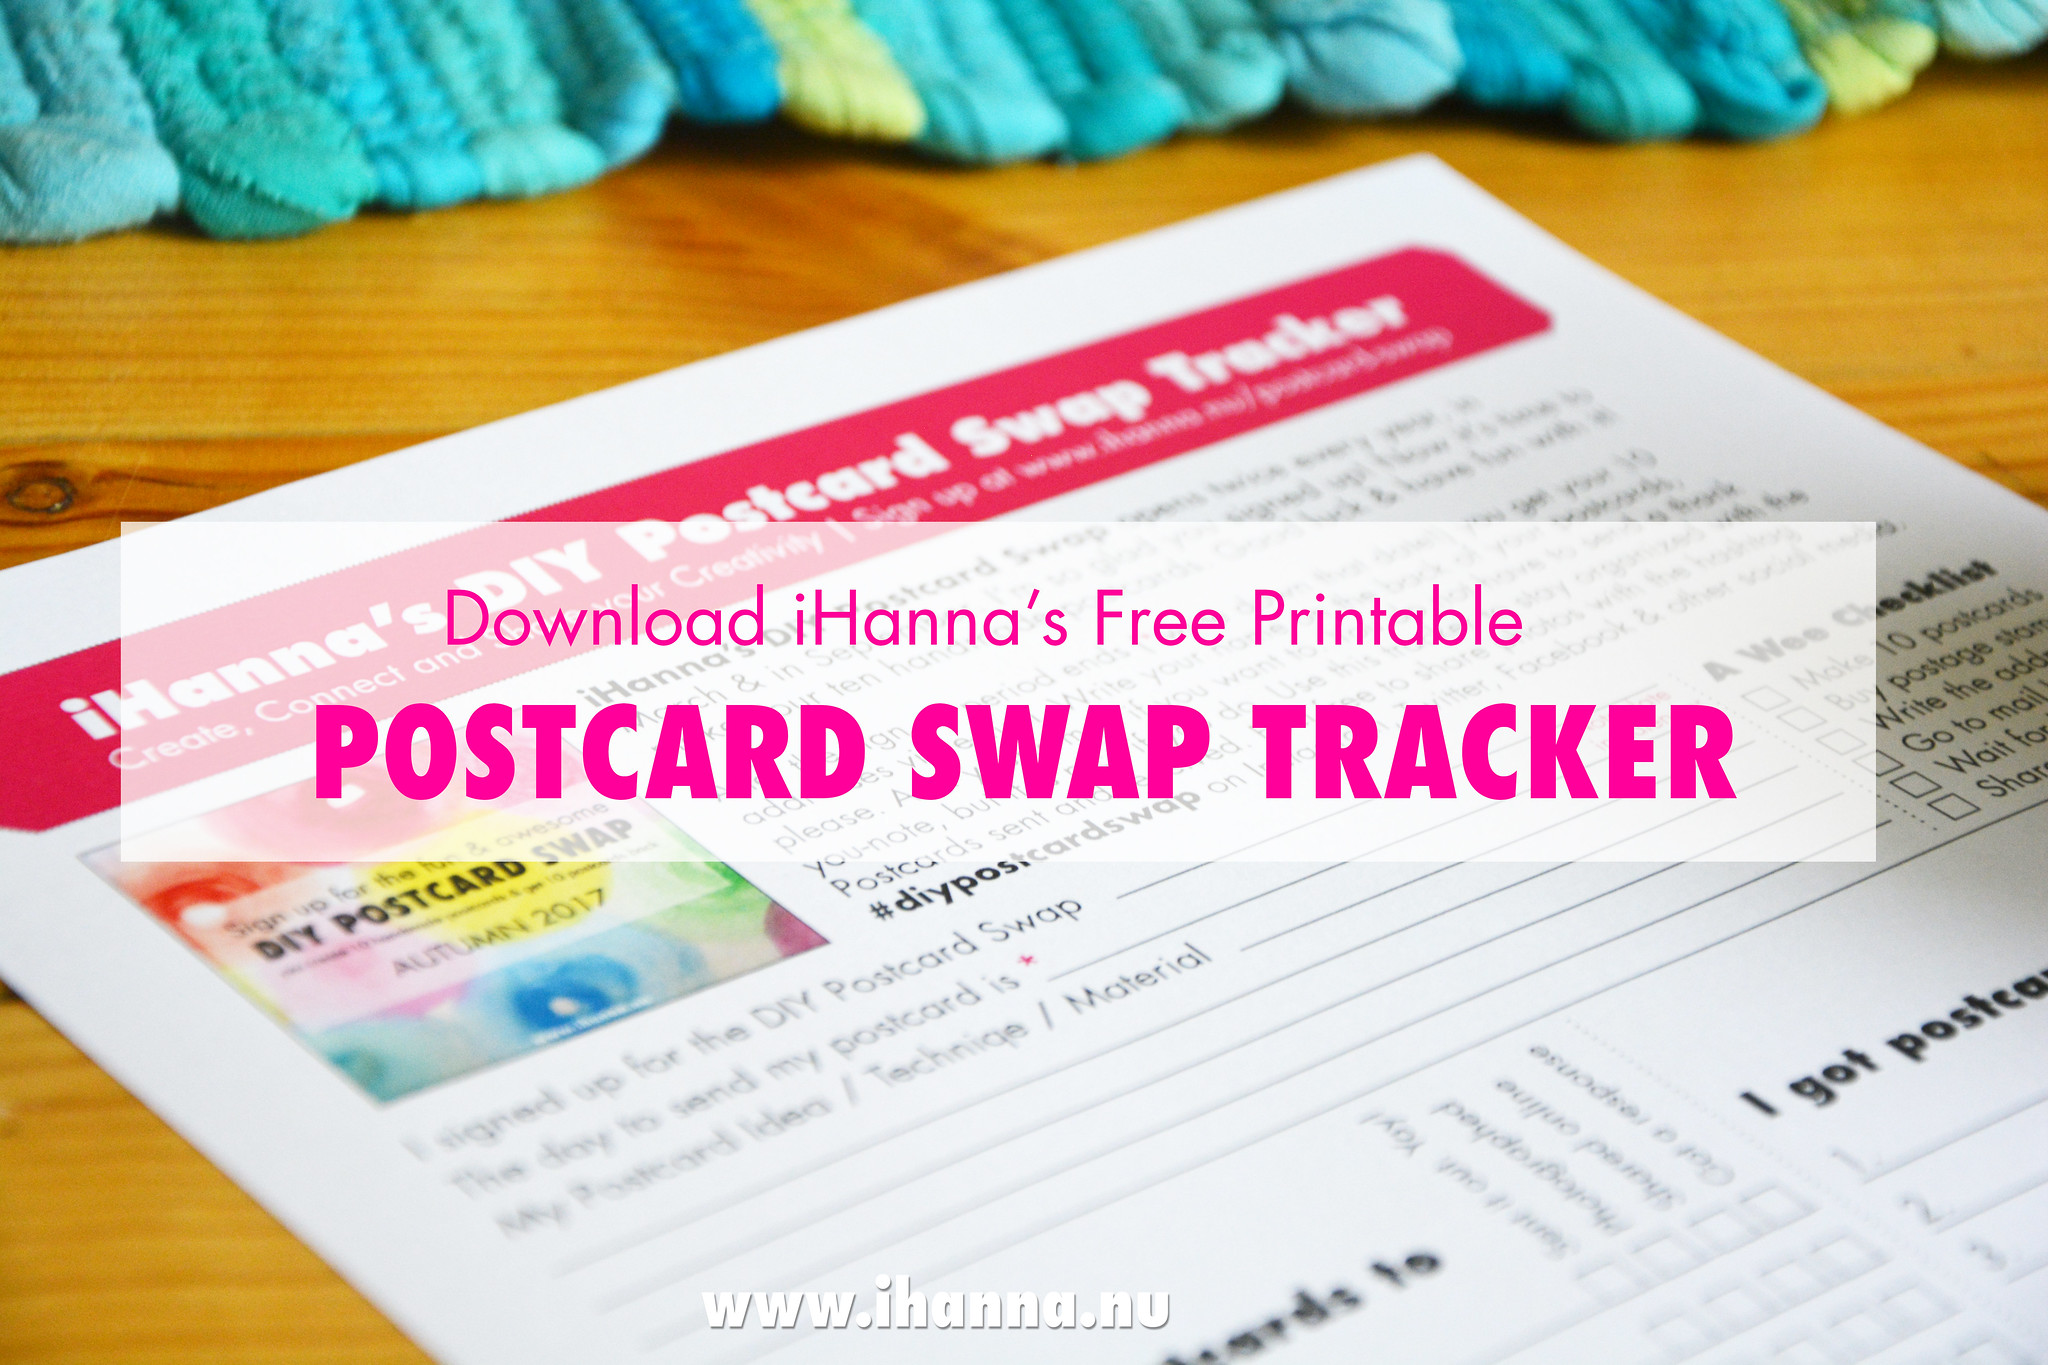 Download the Free Printable DIY Postcard Swap Tracker PDF here